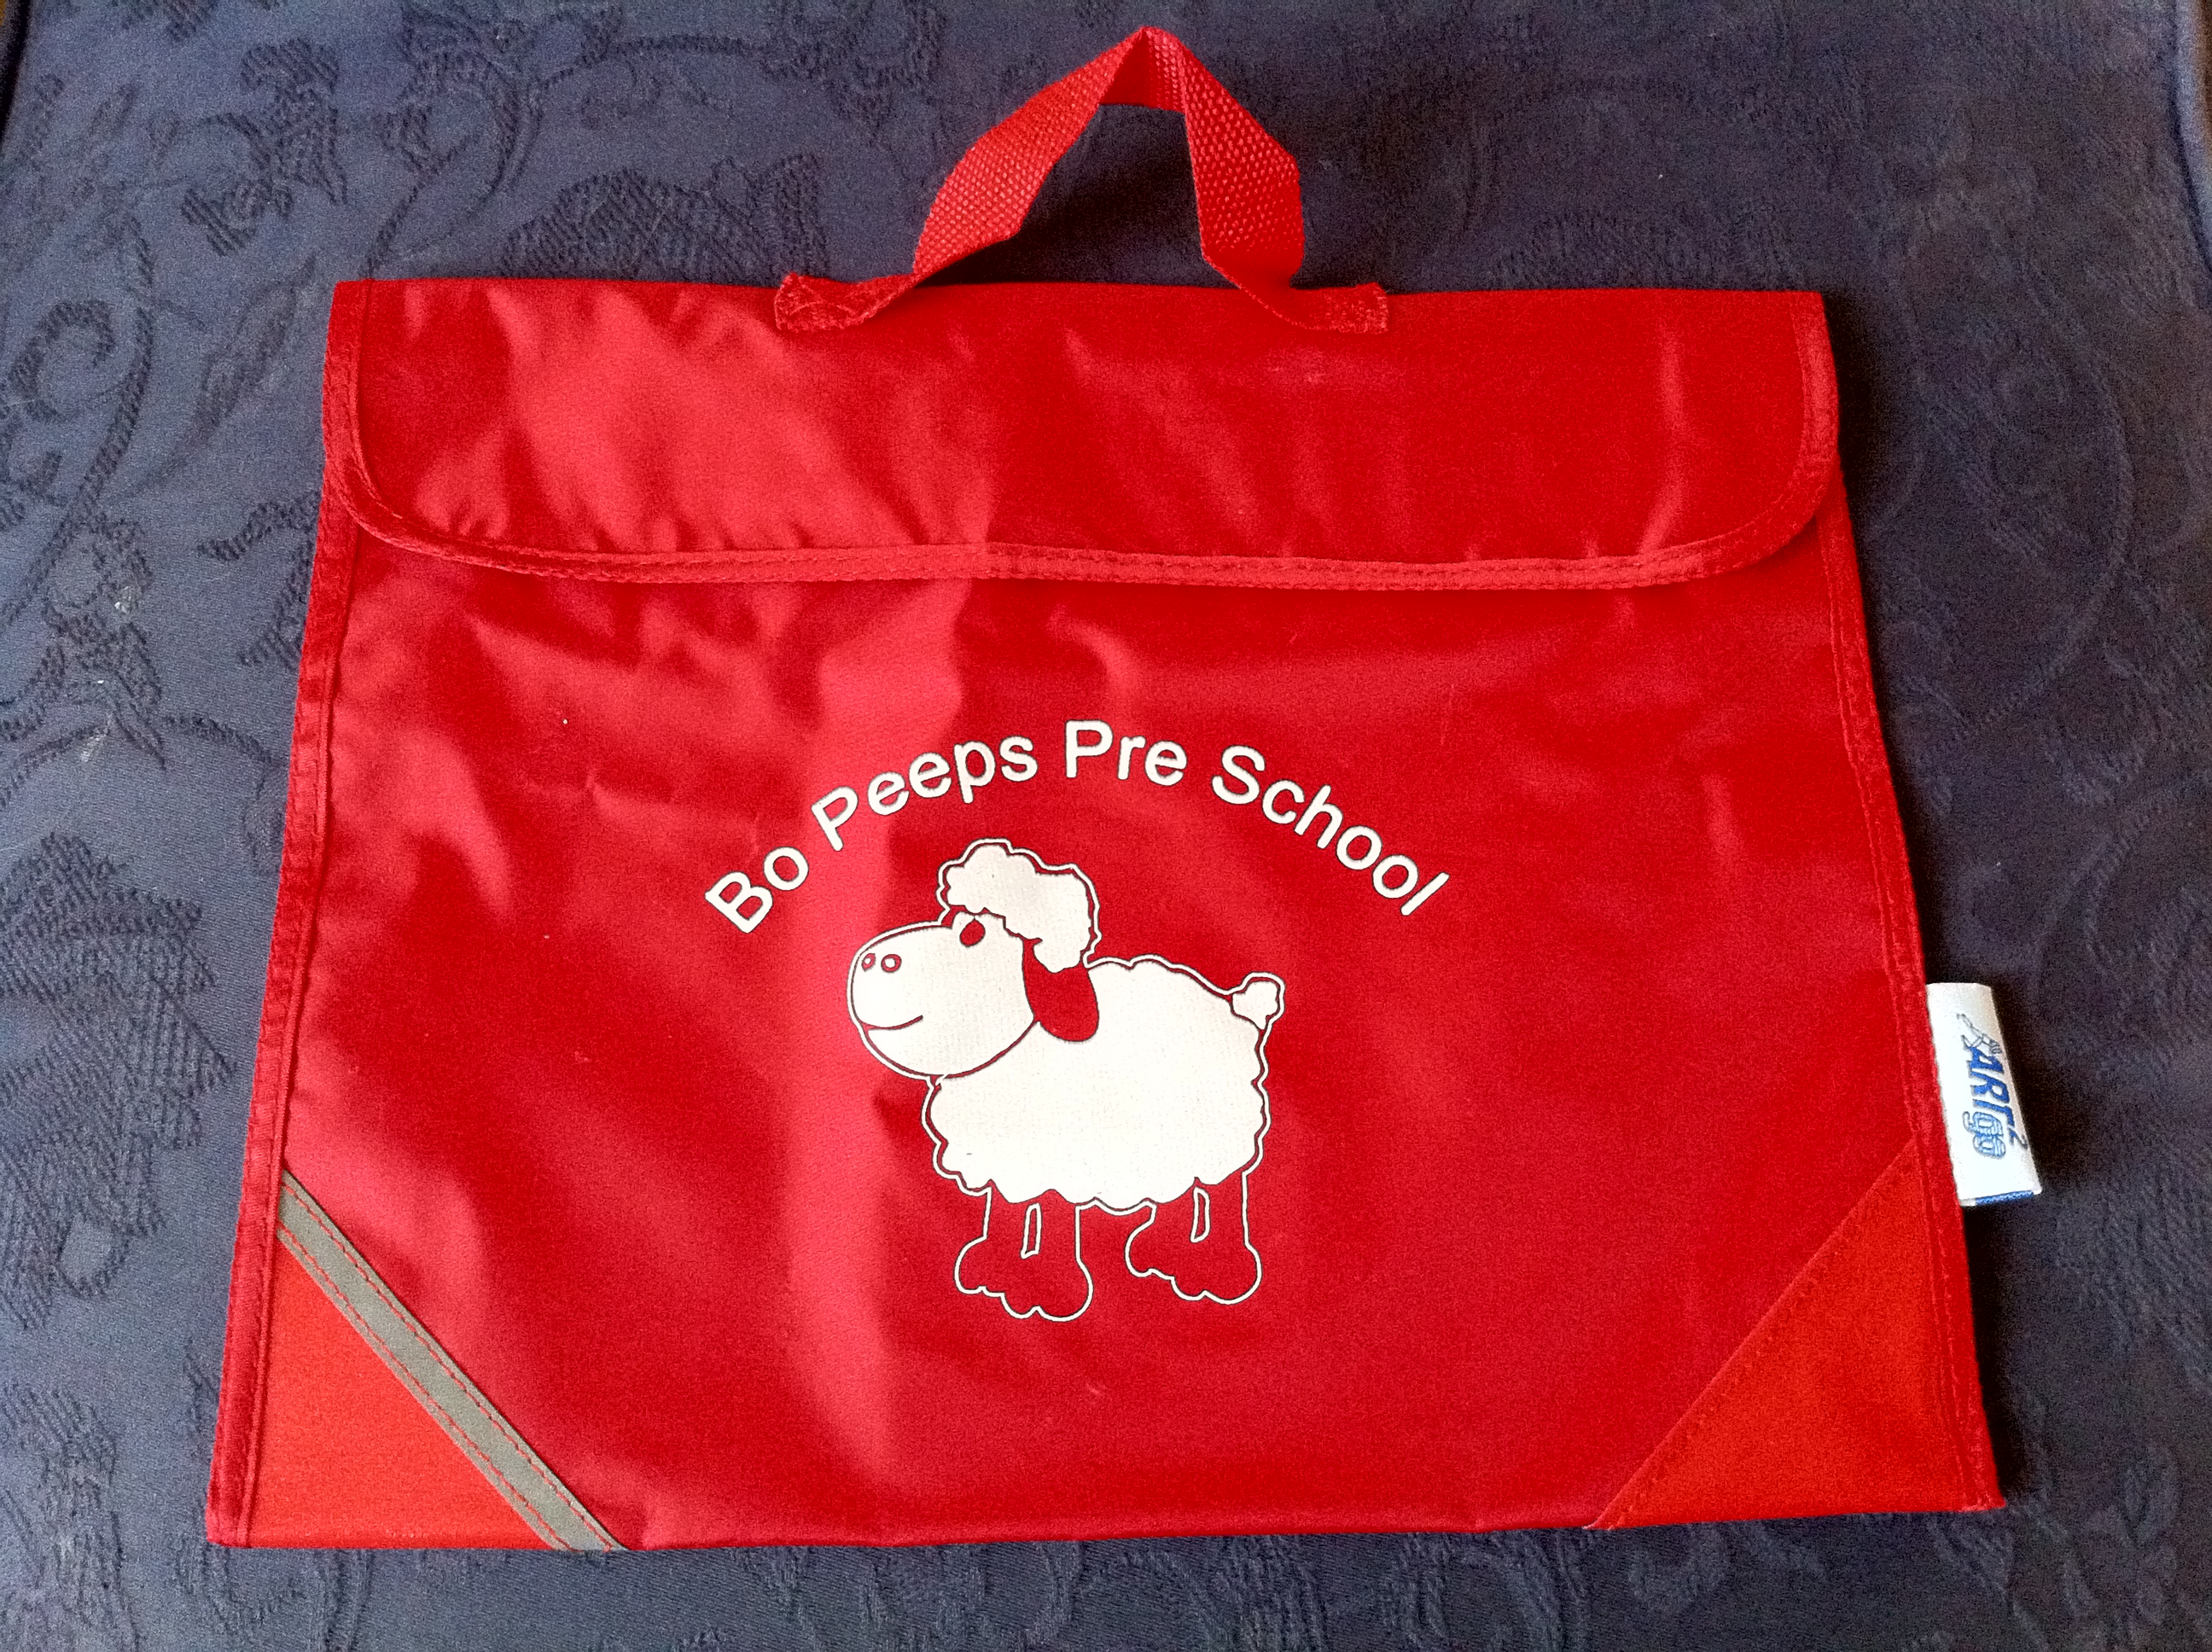 Bopeeps Preschool Bag